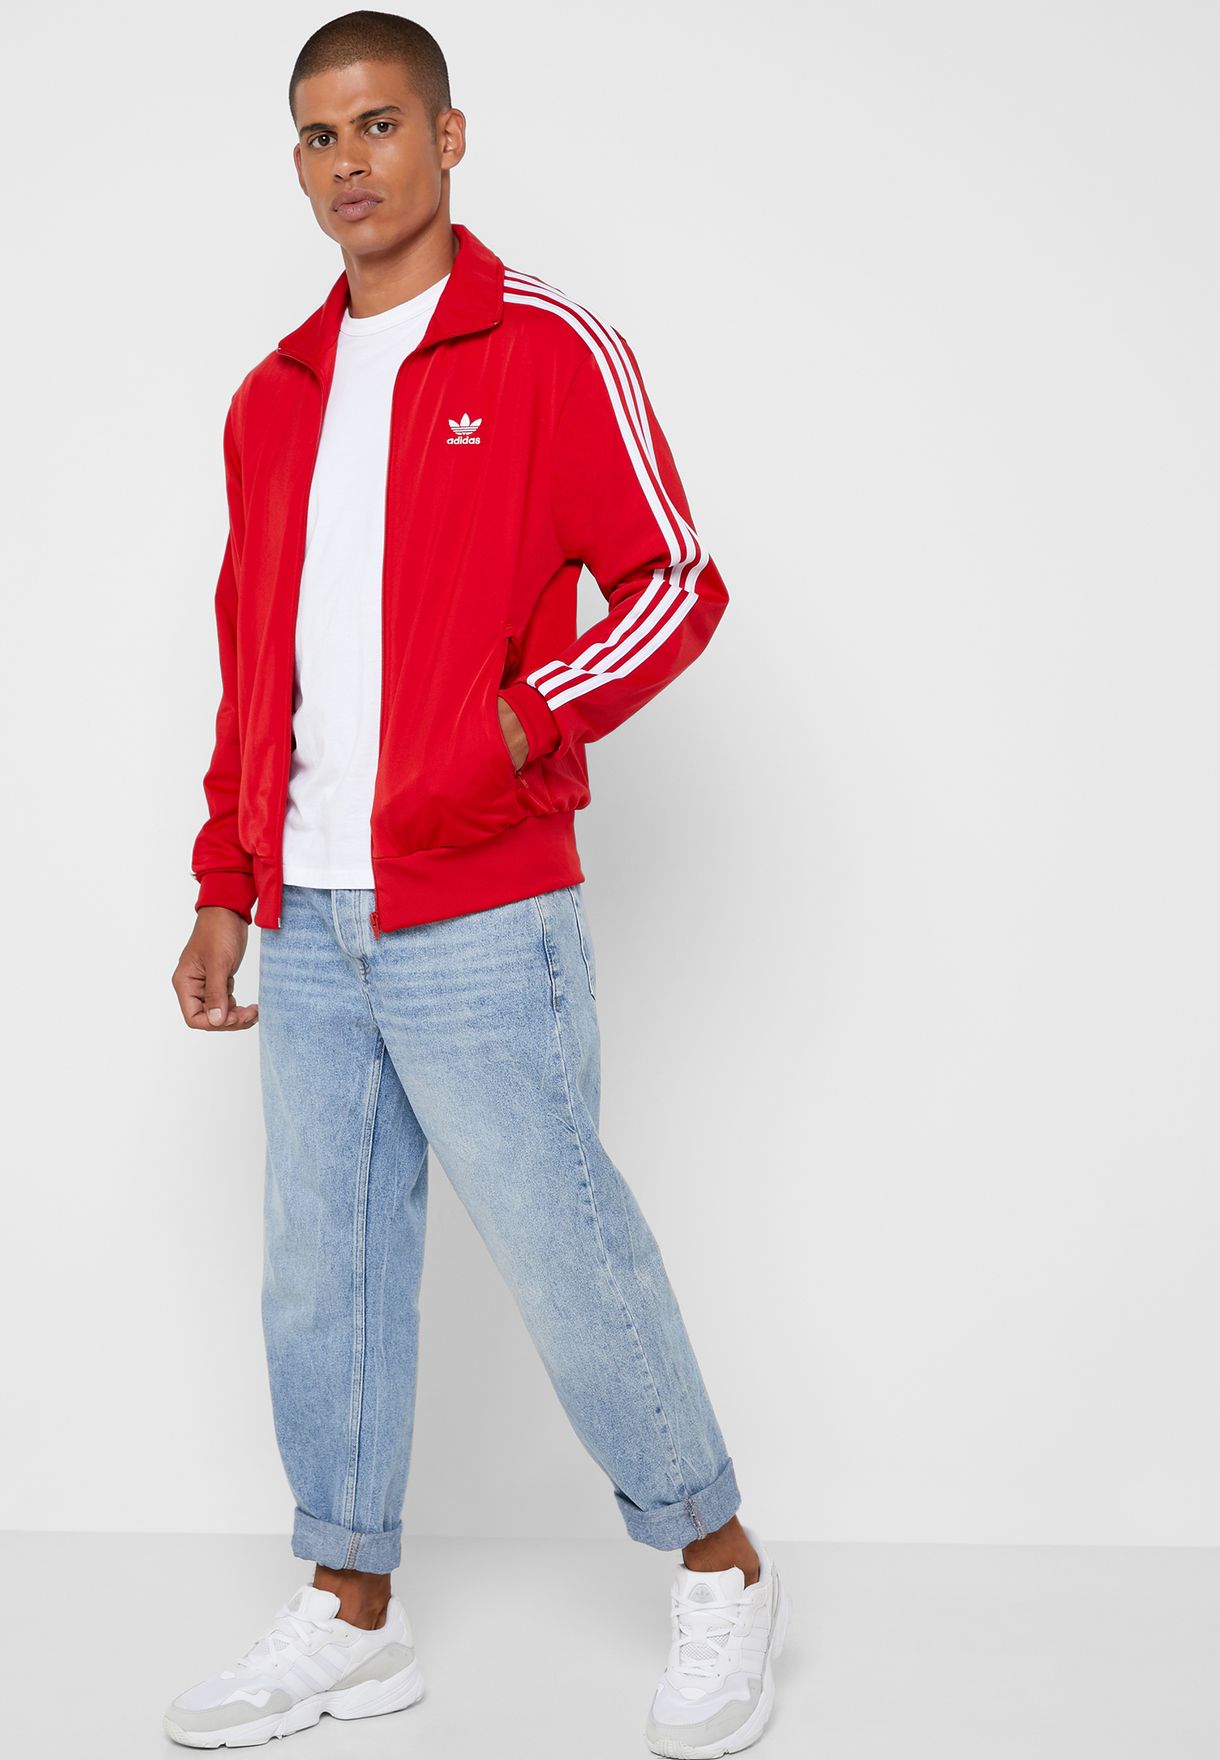 adidas firebird red jacket